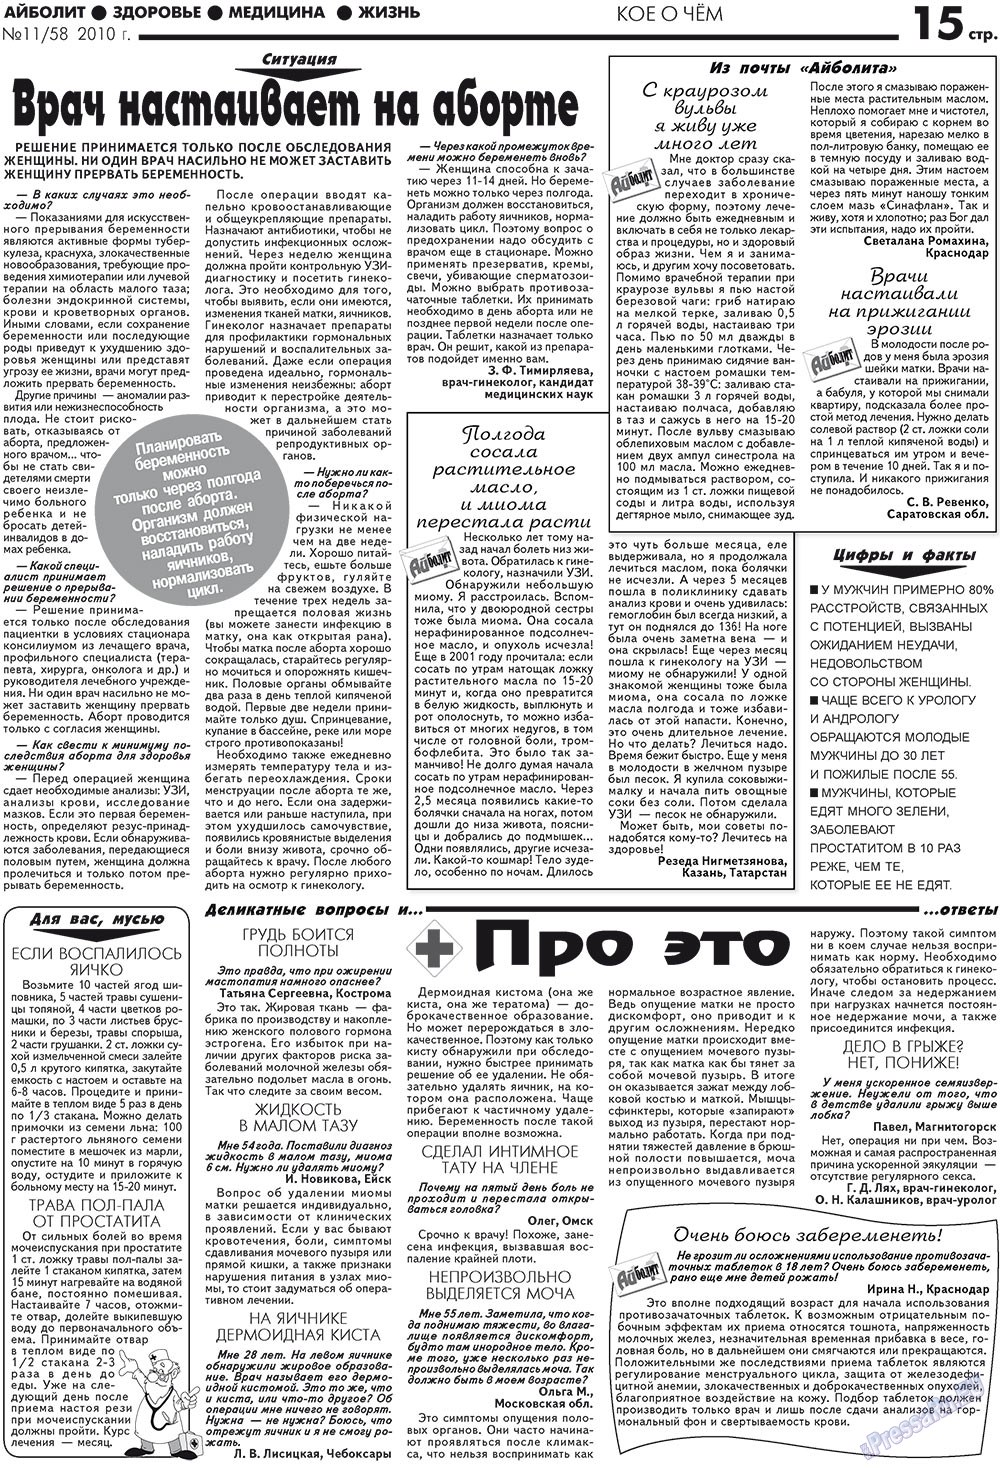 АйБолит (газета). 2010 год, номер 11, стр. 15